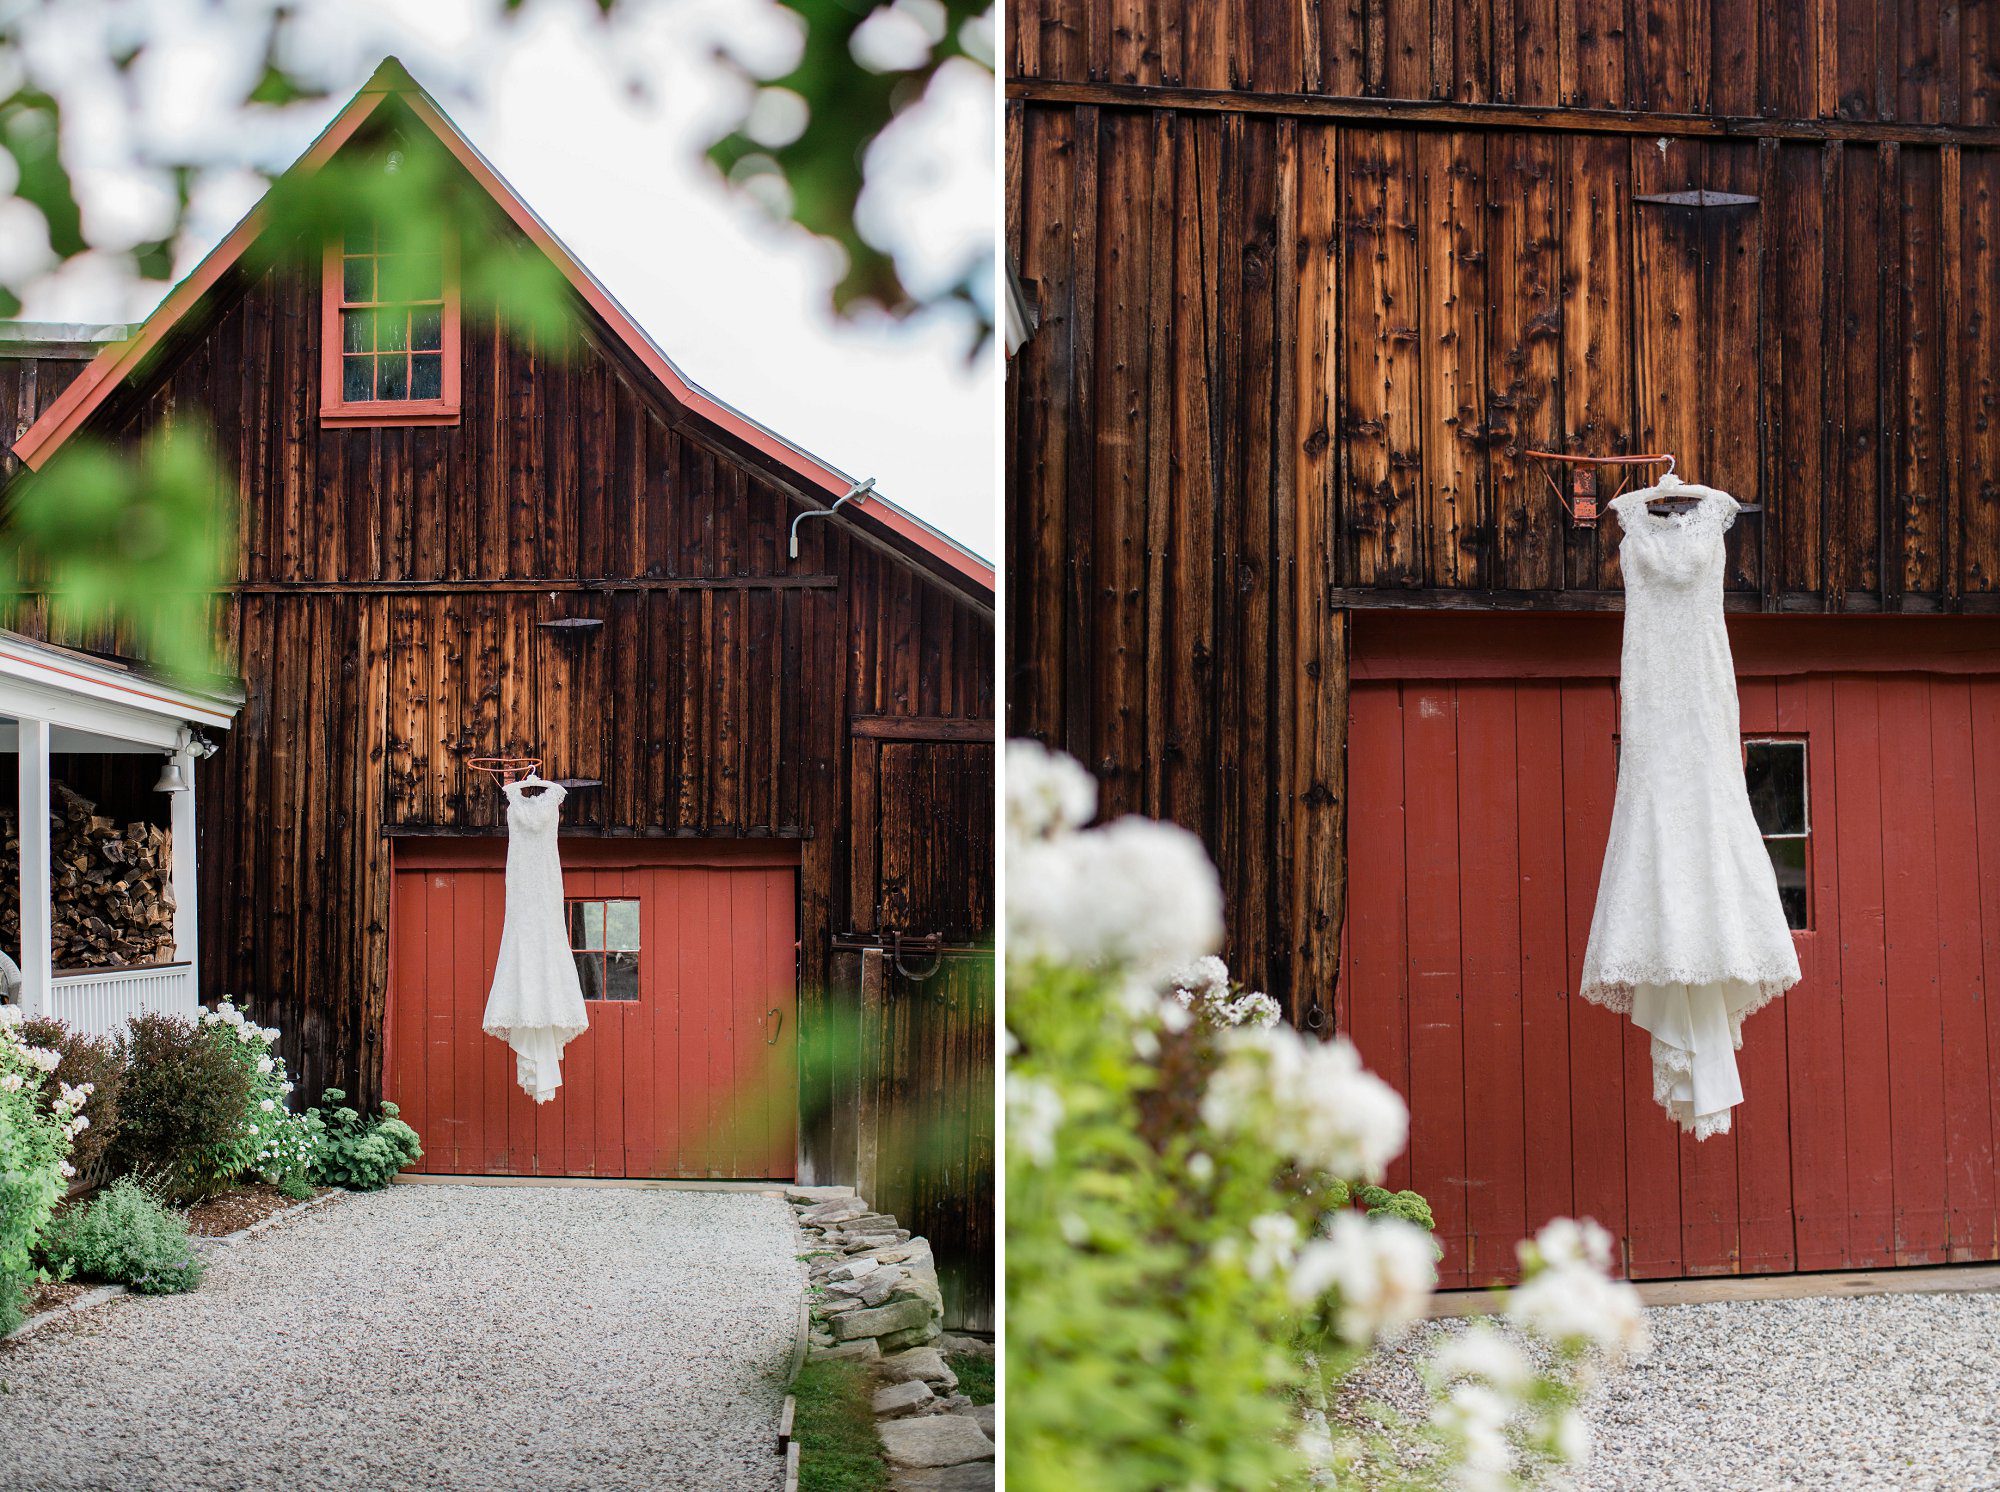 Wedding dress hanging on big wooden barn by the basketball hoop